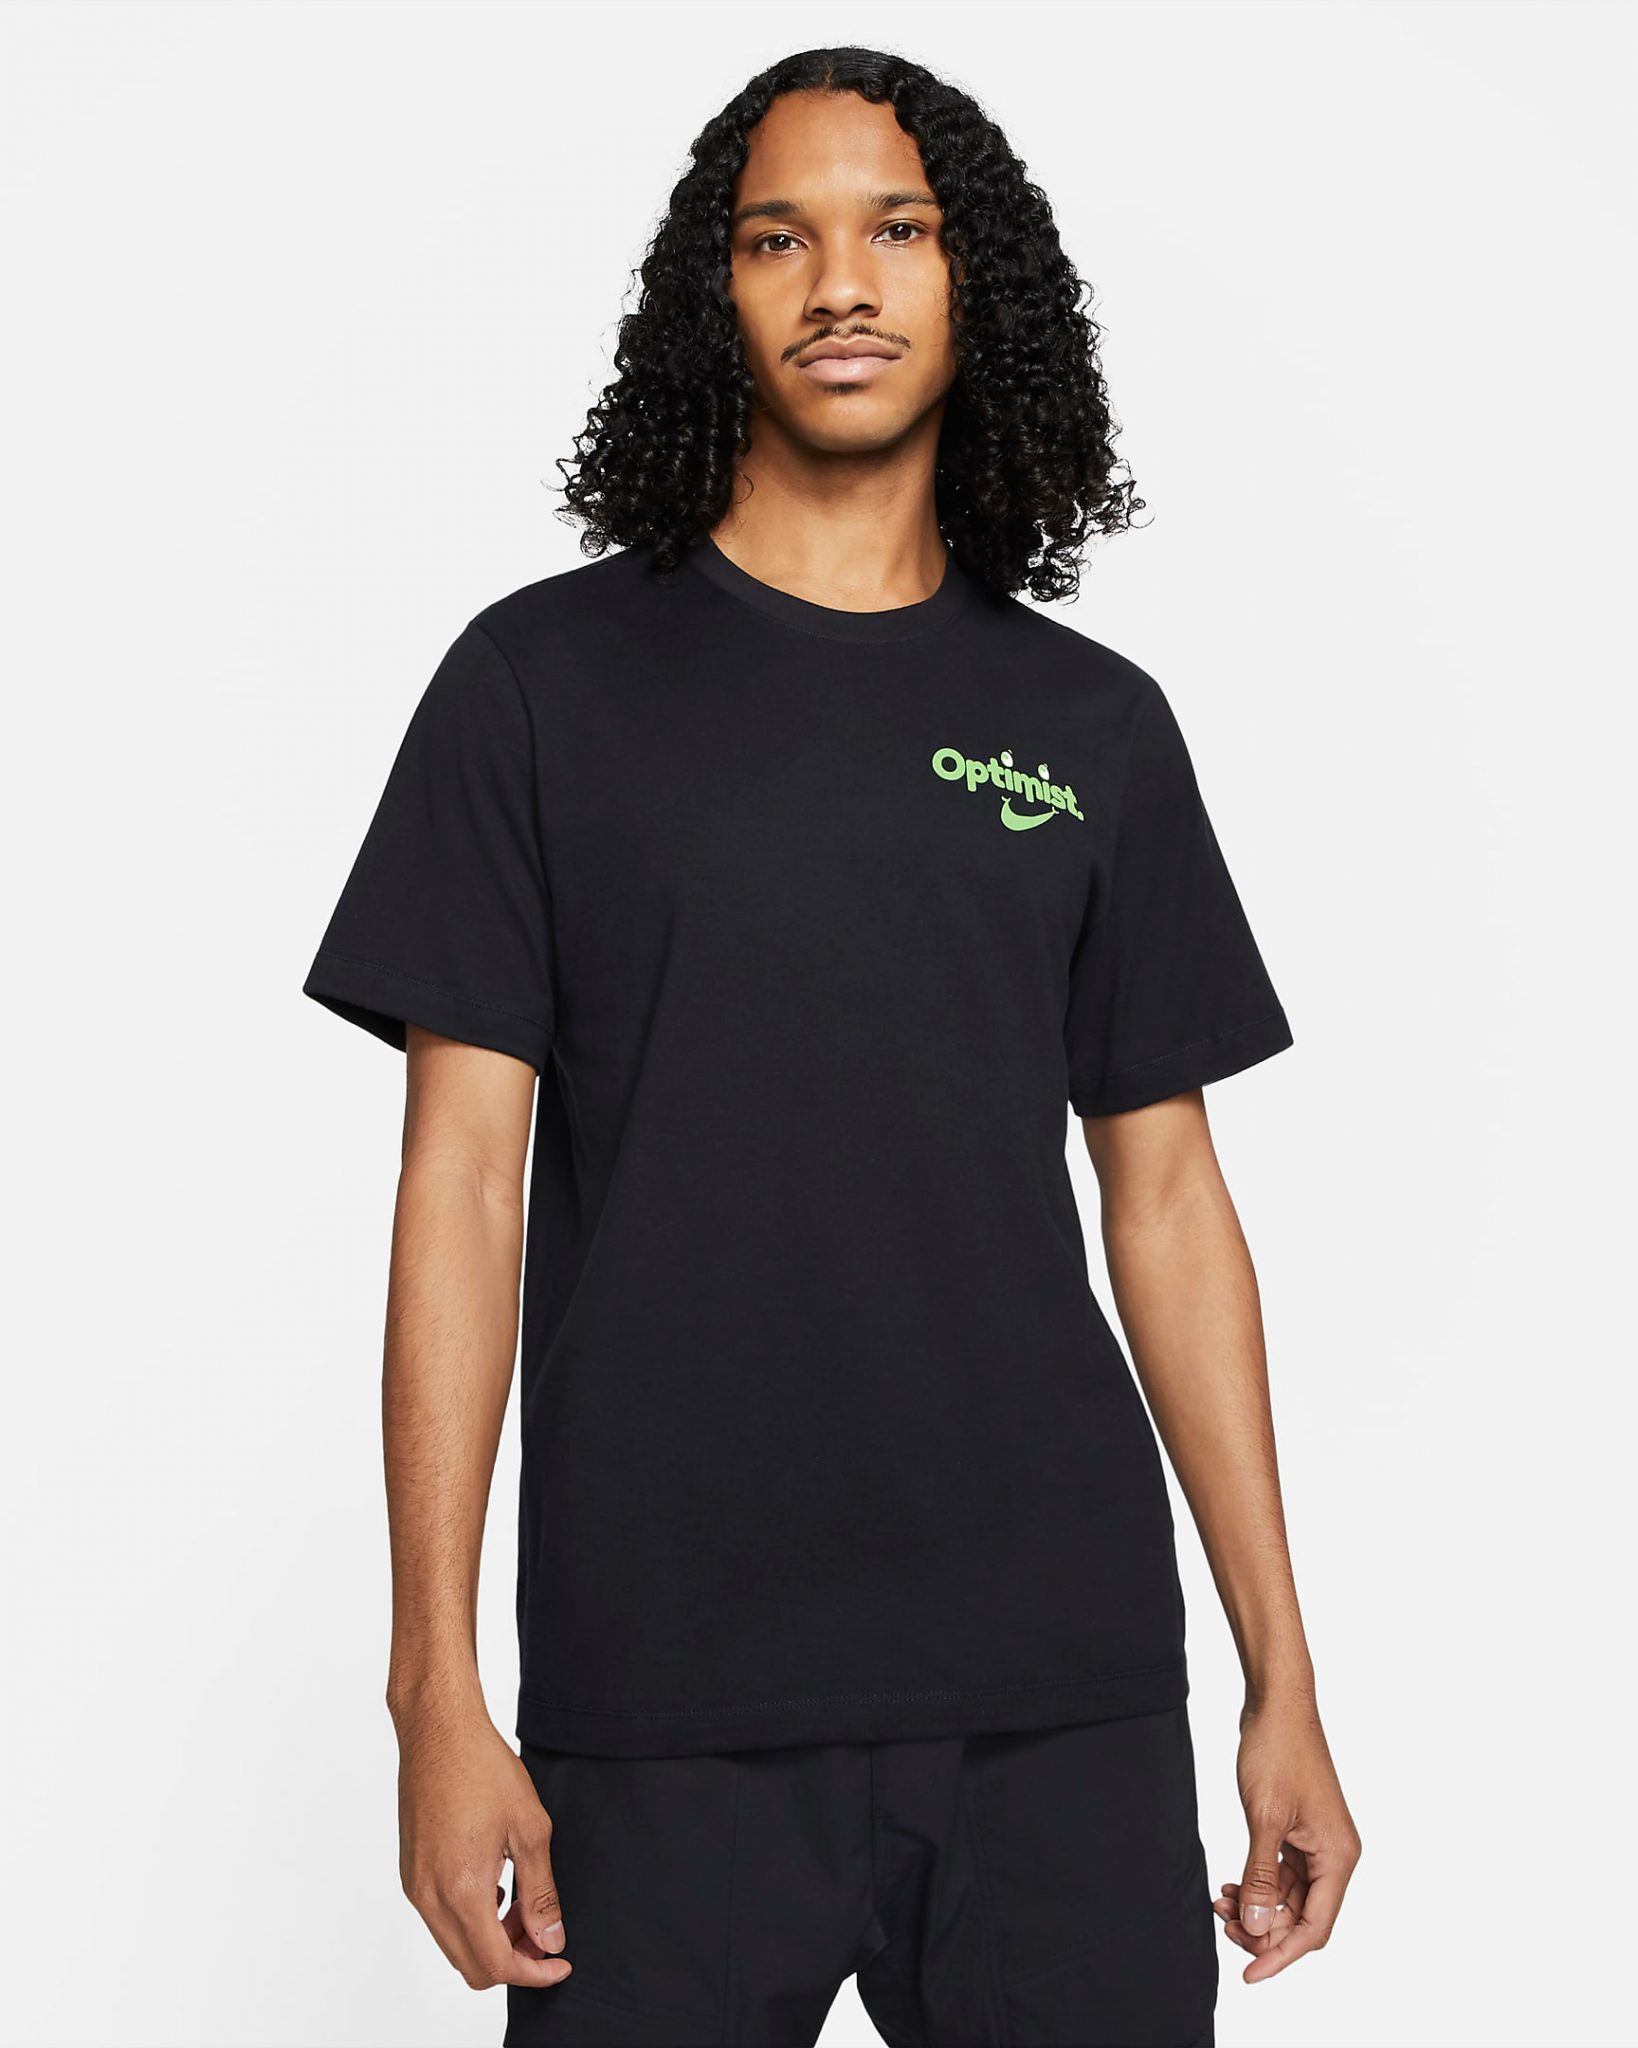 Nike Air Huarache Scream Green 2021 Shirts Outfits to Match